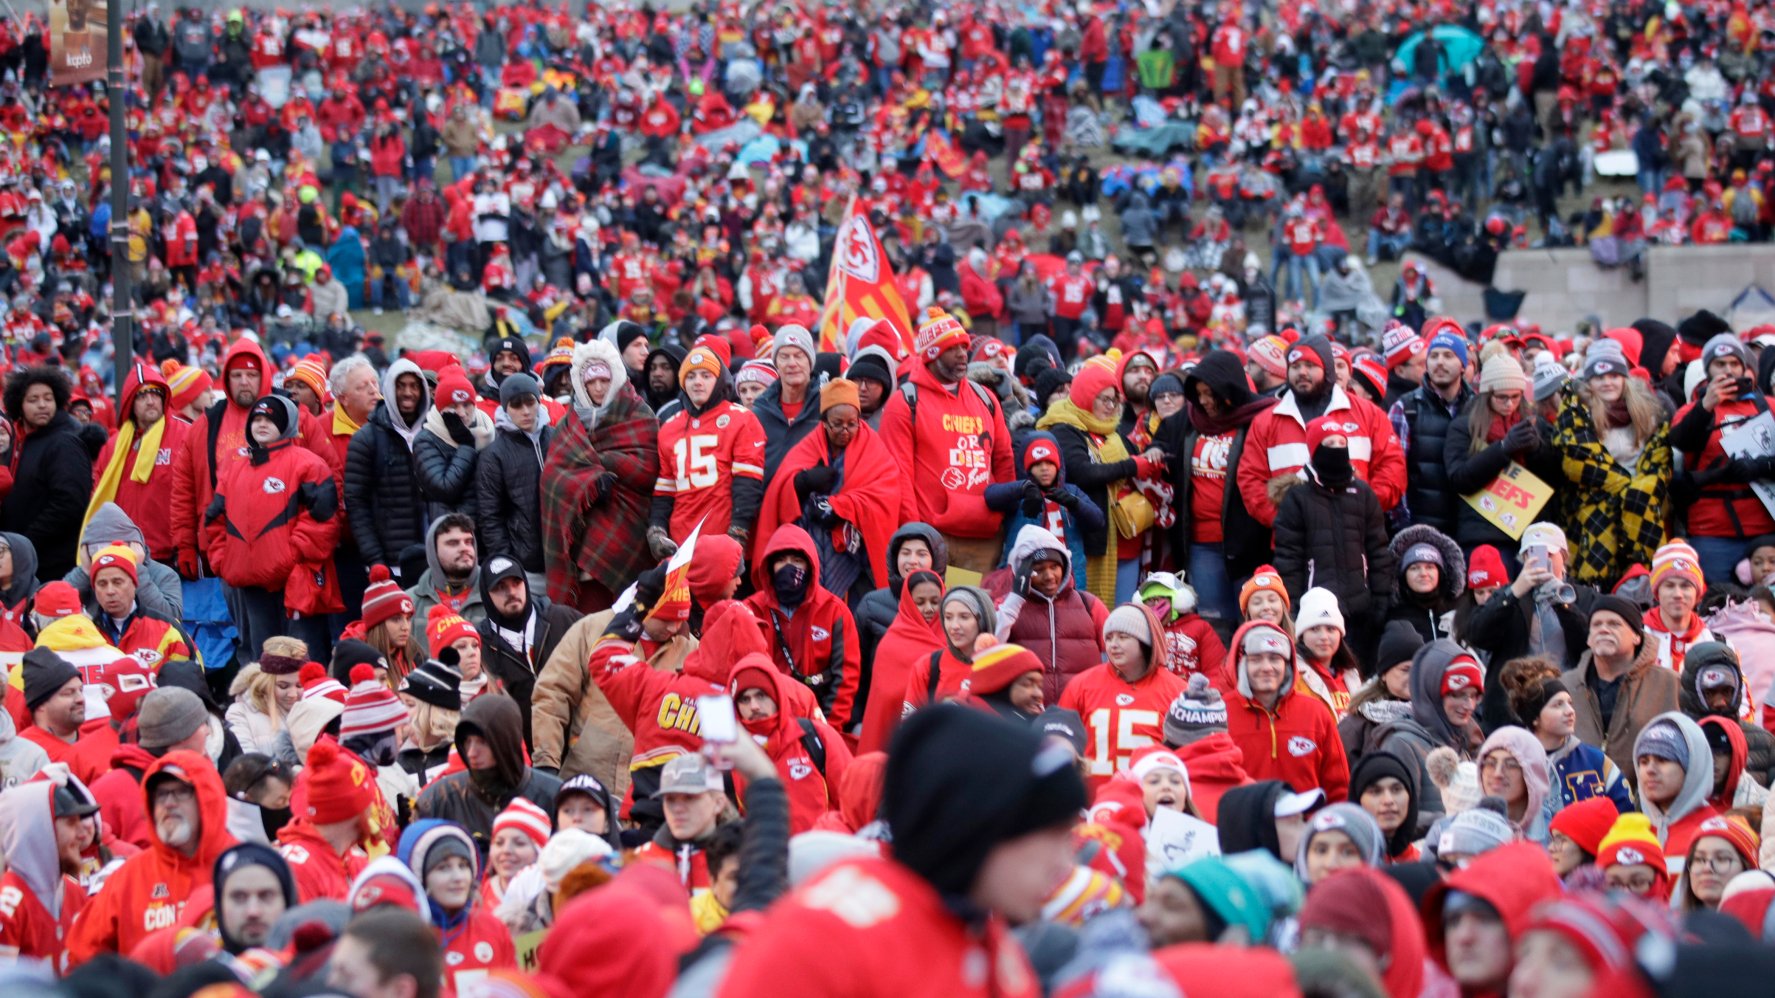 Kansas City Chiefs Celebrate Super Bowl Win With Parade, Rally NBC10